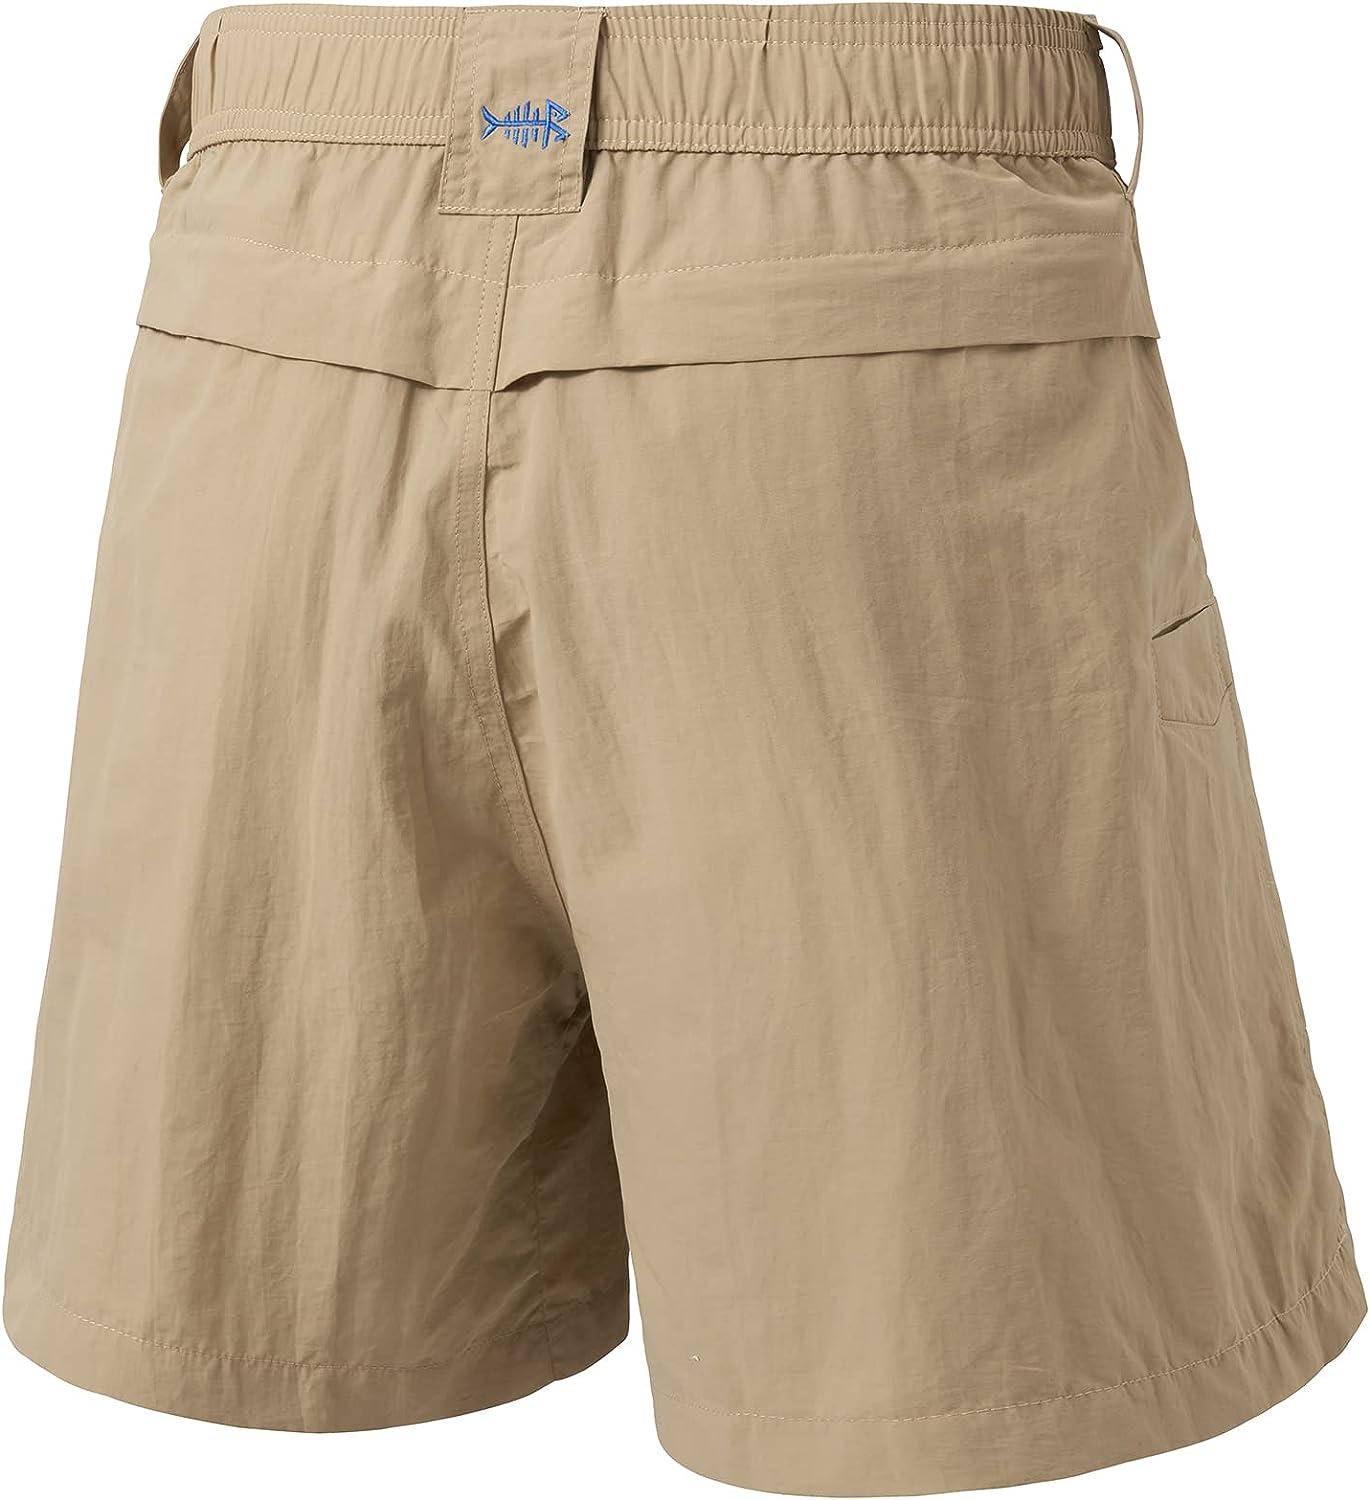 BASSDASH Men's 6 Fishing Shorts UPF 50+ Water Resistant Quick Dry Hiking Cargo  Shorts with Multi Pocket FP03M Khaki Large